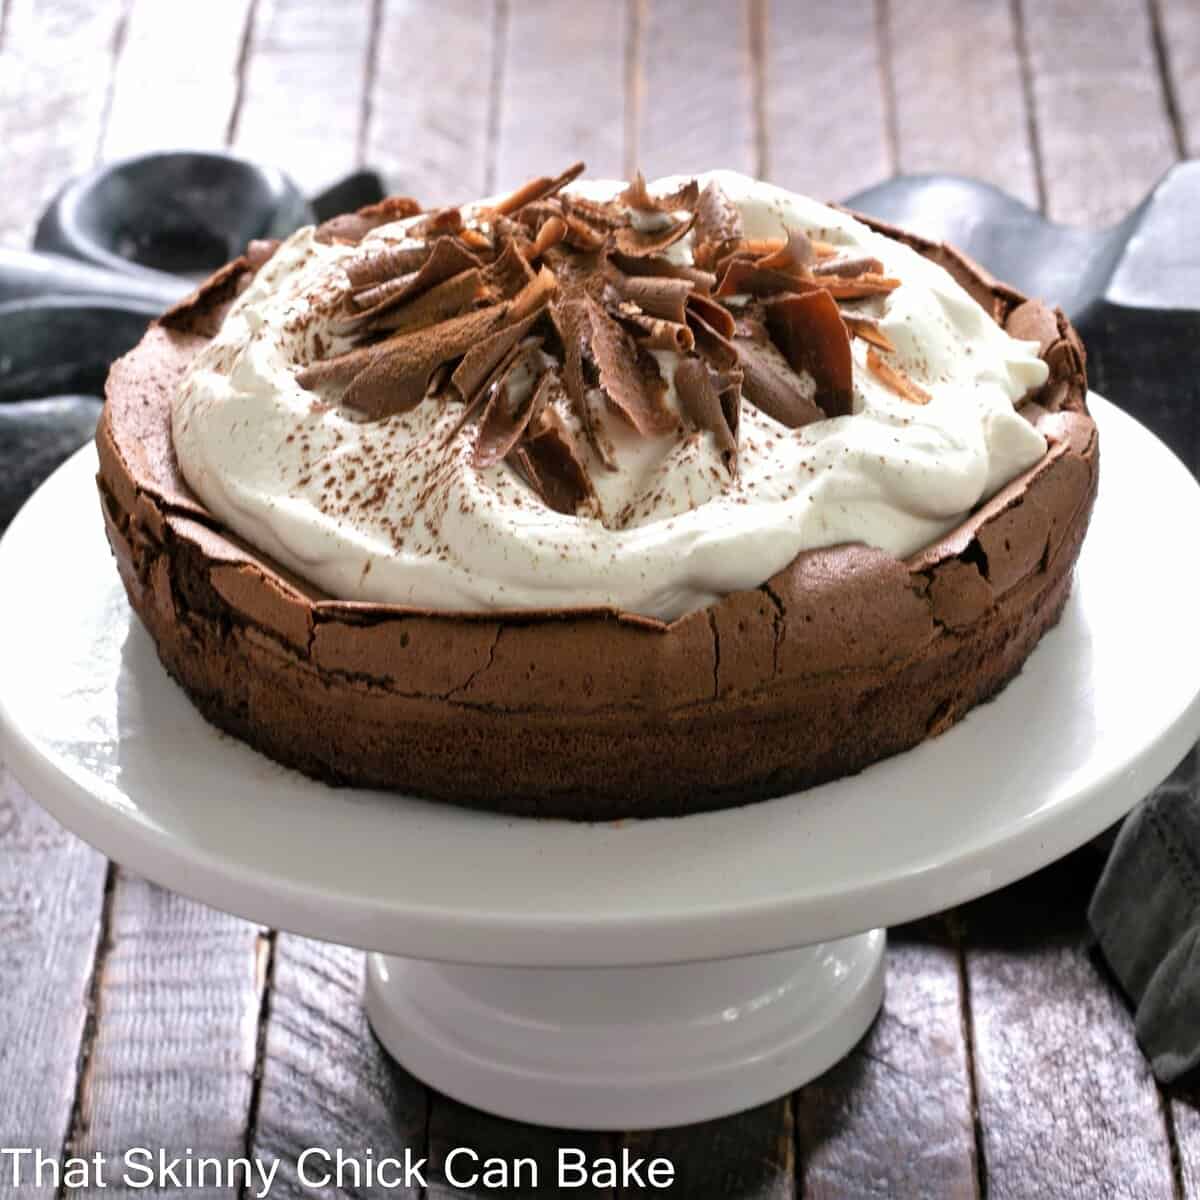 Chocolate souffle cake on a white ceramic cake stand.